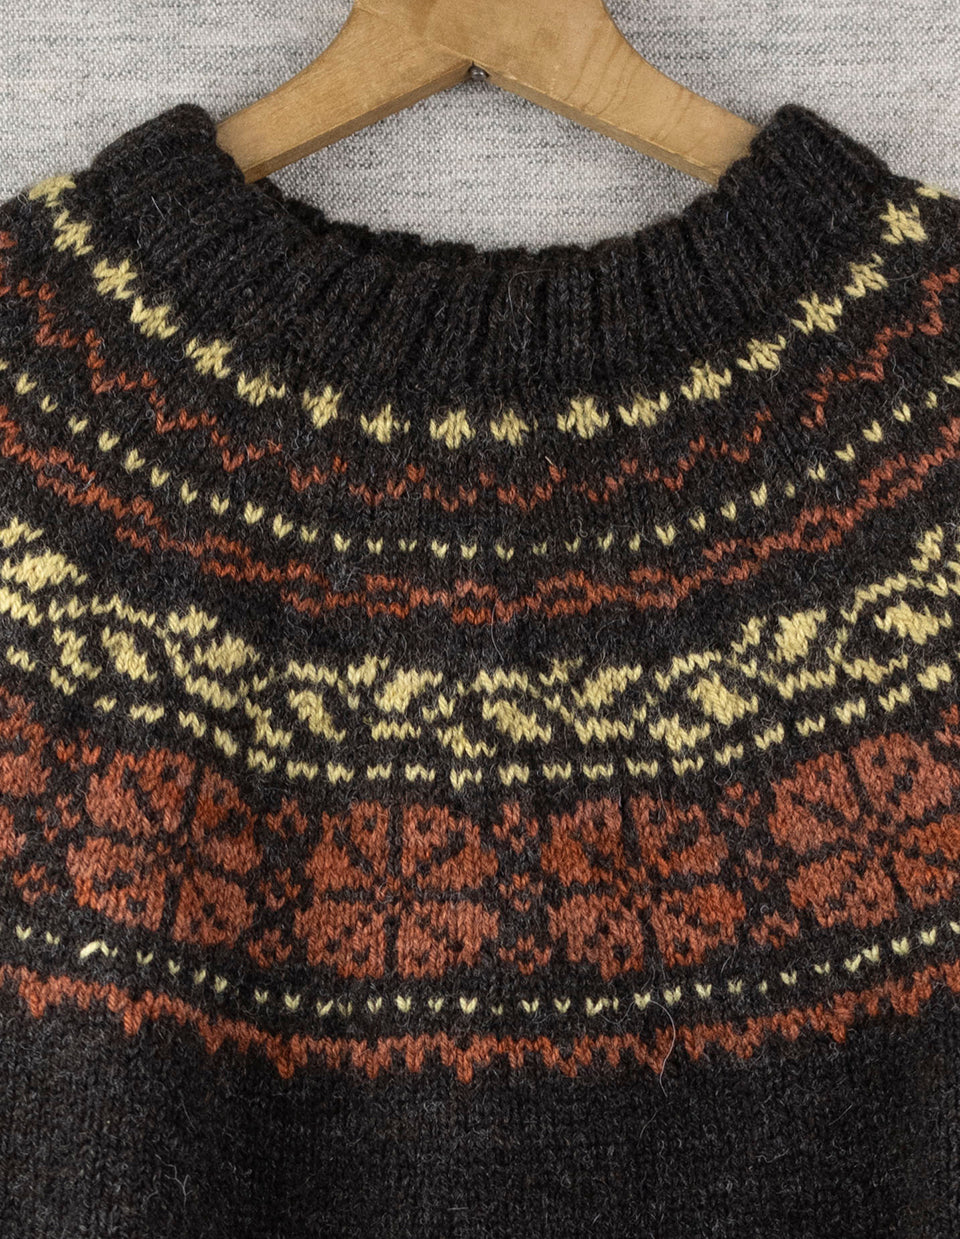 Markens grøde, hand knitted sweater